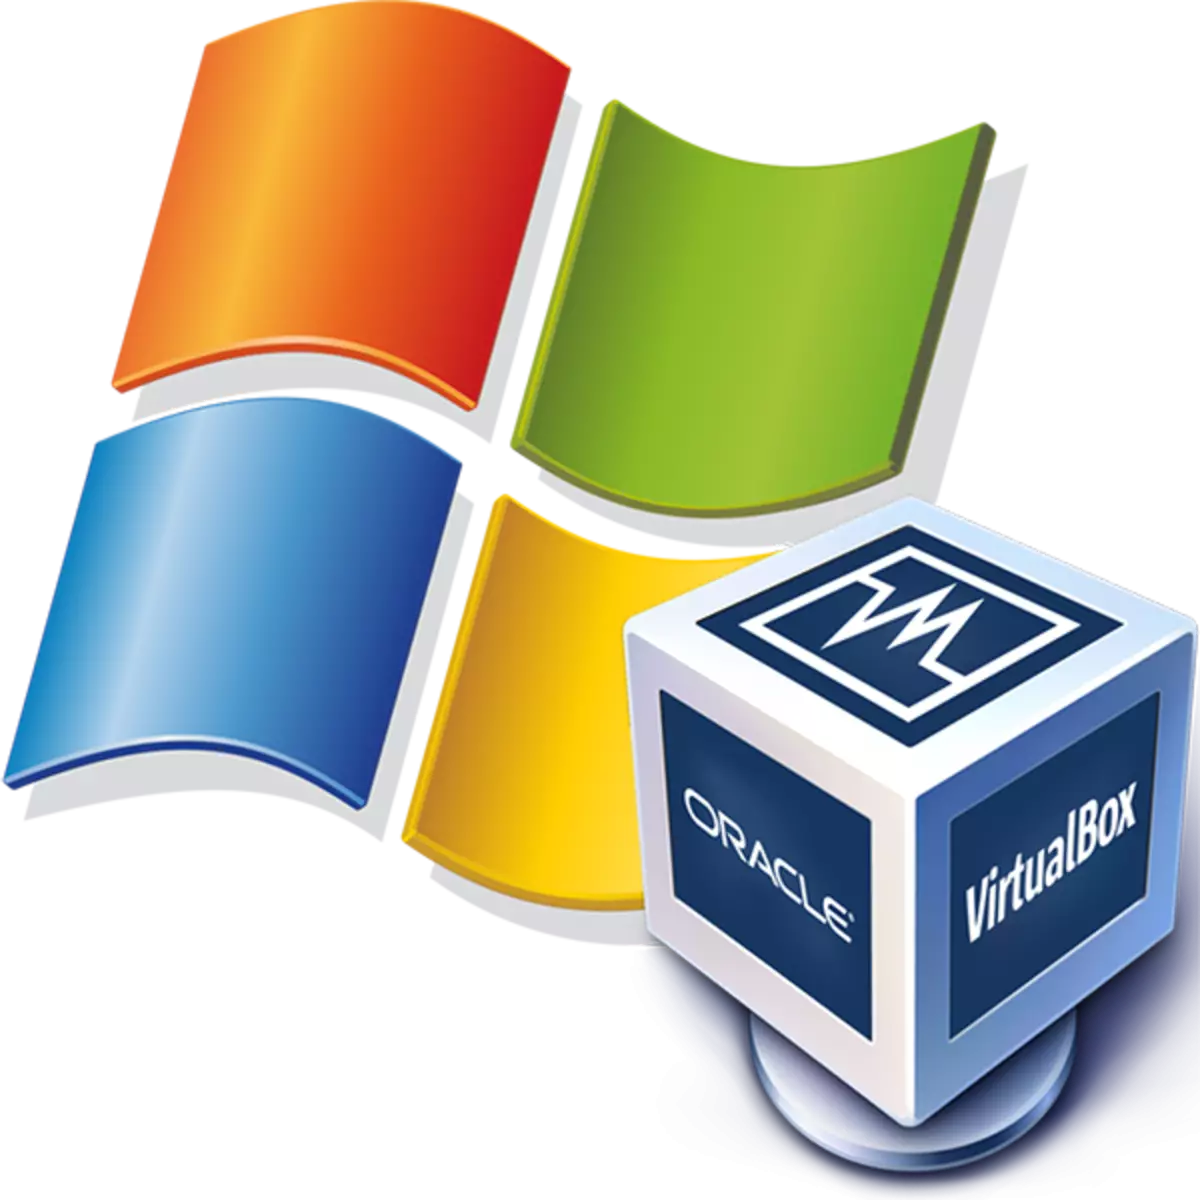 Installation af Windows XP på VirtualBox